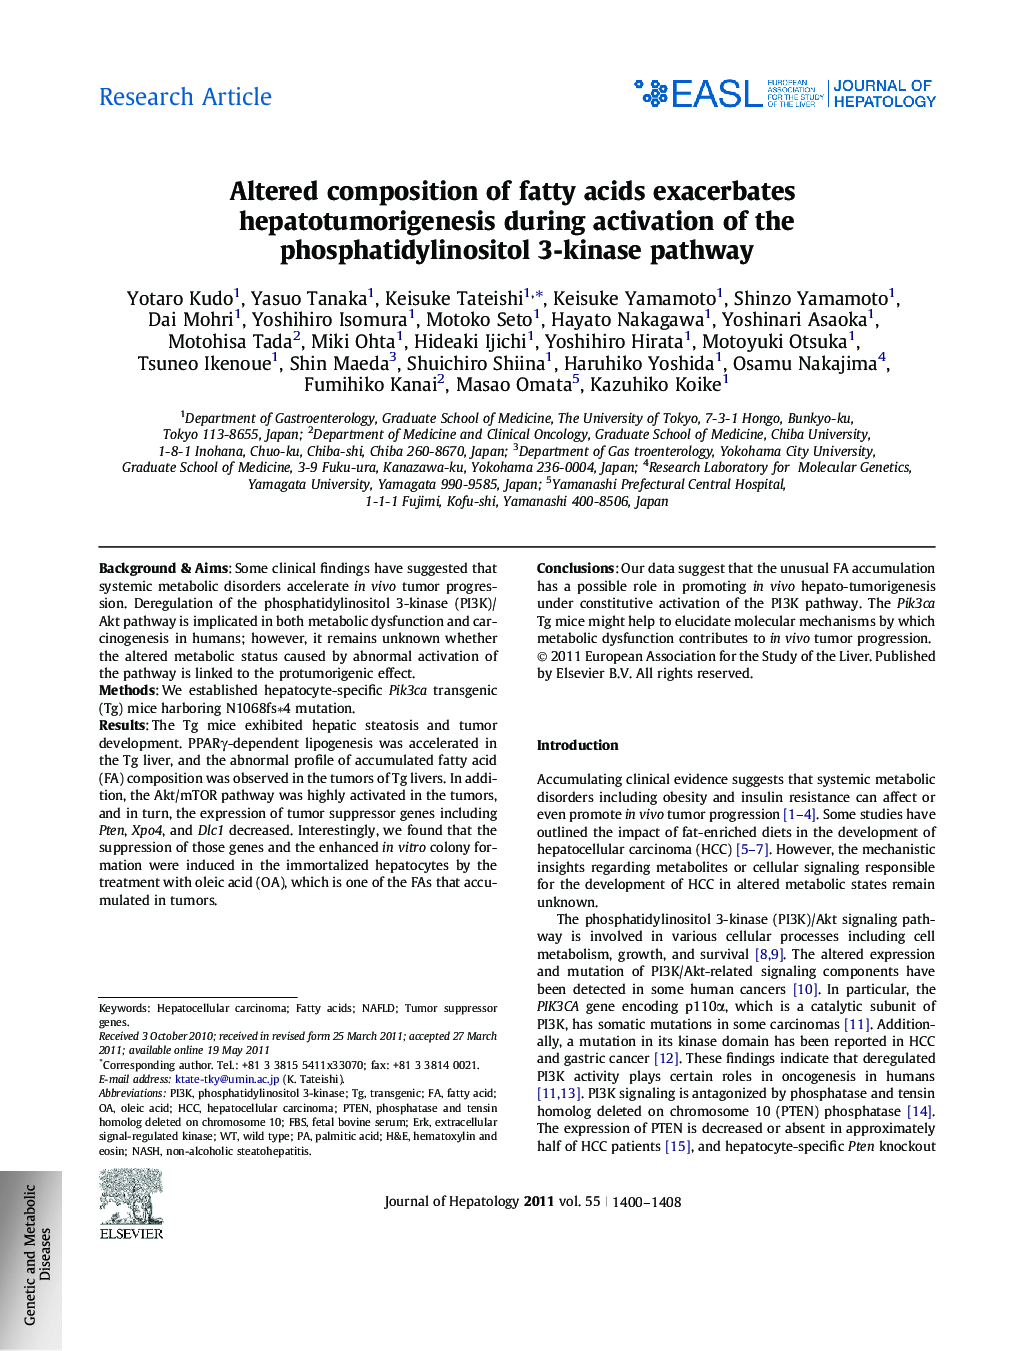 Research ArticleAltered composition of fatty acids exacerbates hepatotumorigenesis during activation of the phosphatidylinositol 3-kinase pathway